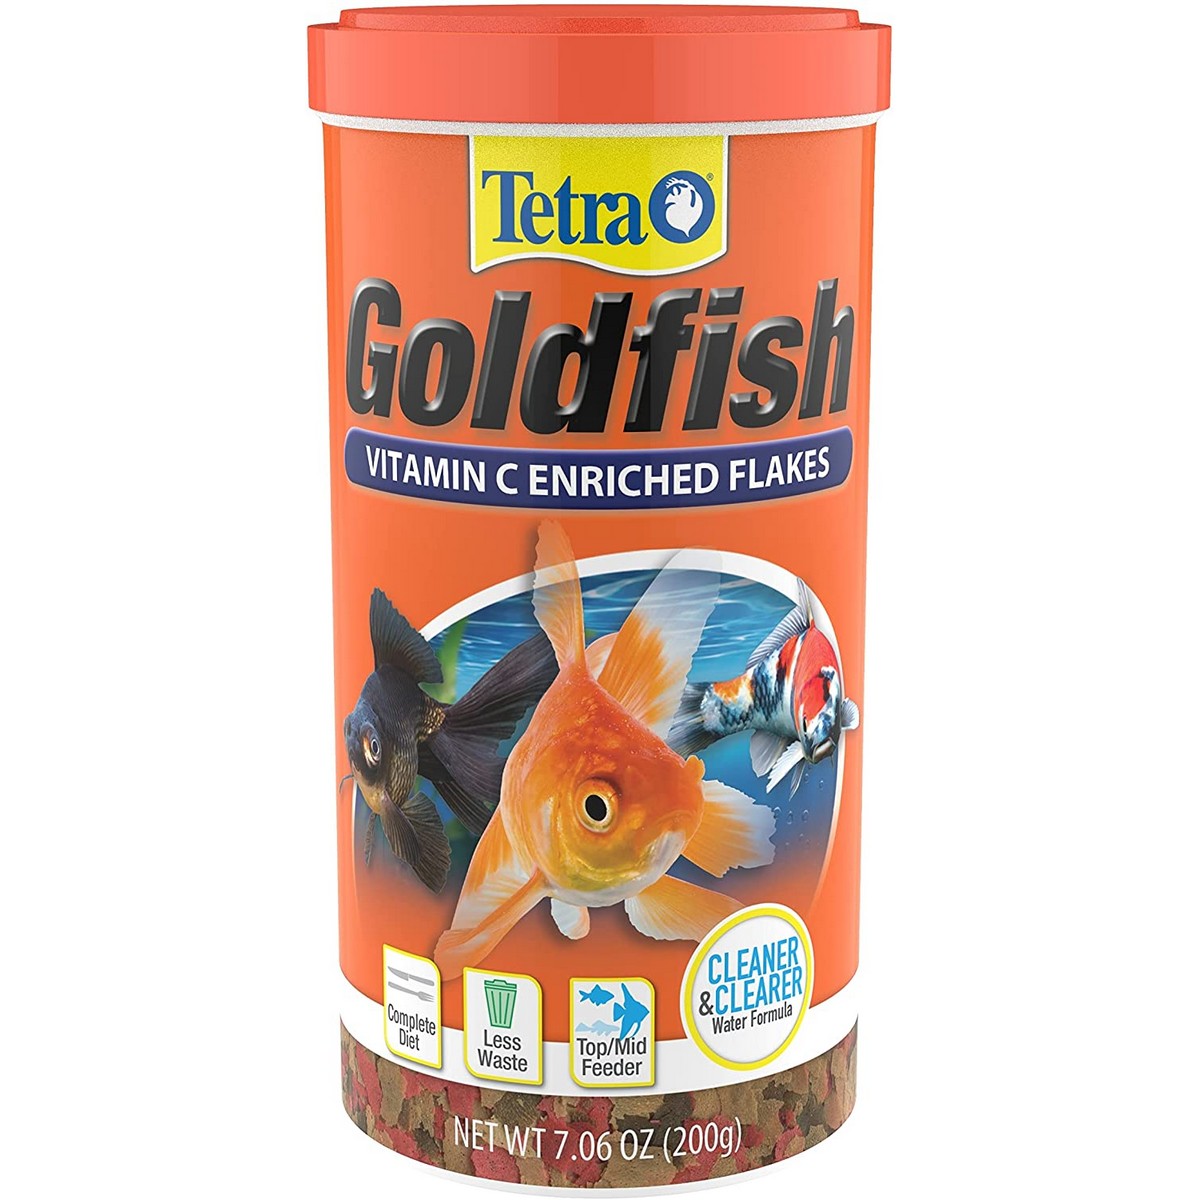 TETRA Pond Flakes Small Fish Food, 6.35-oz jar 